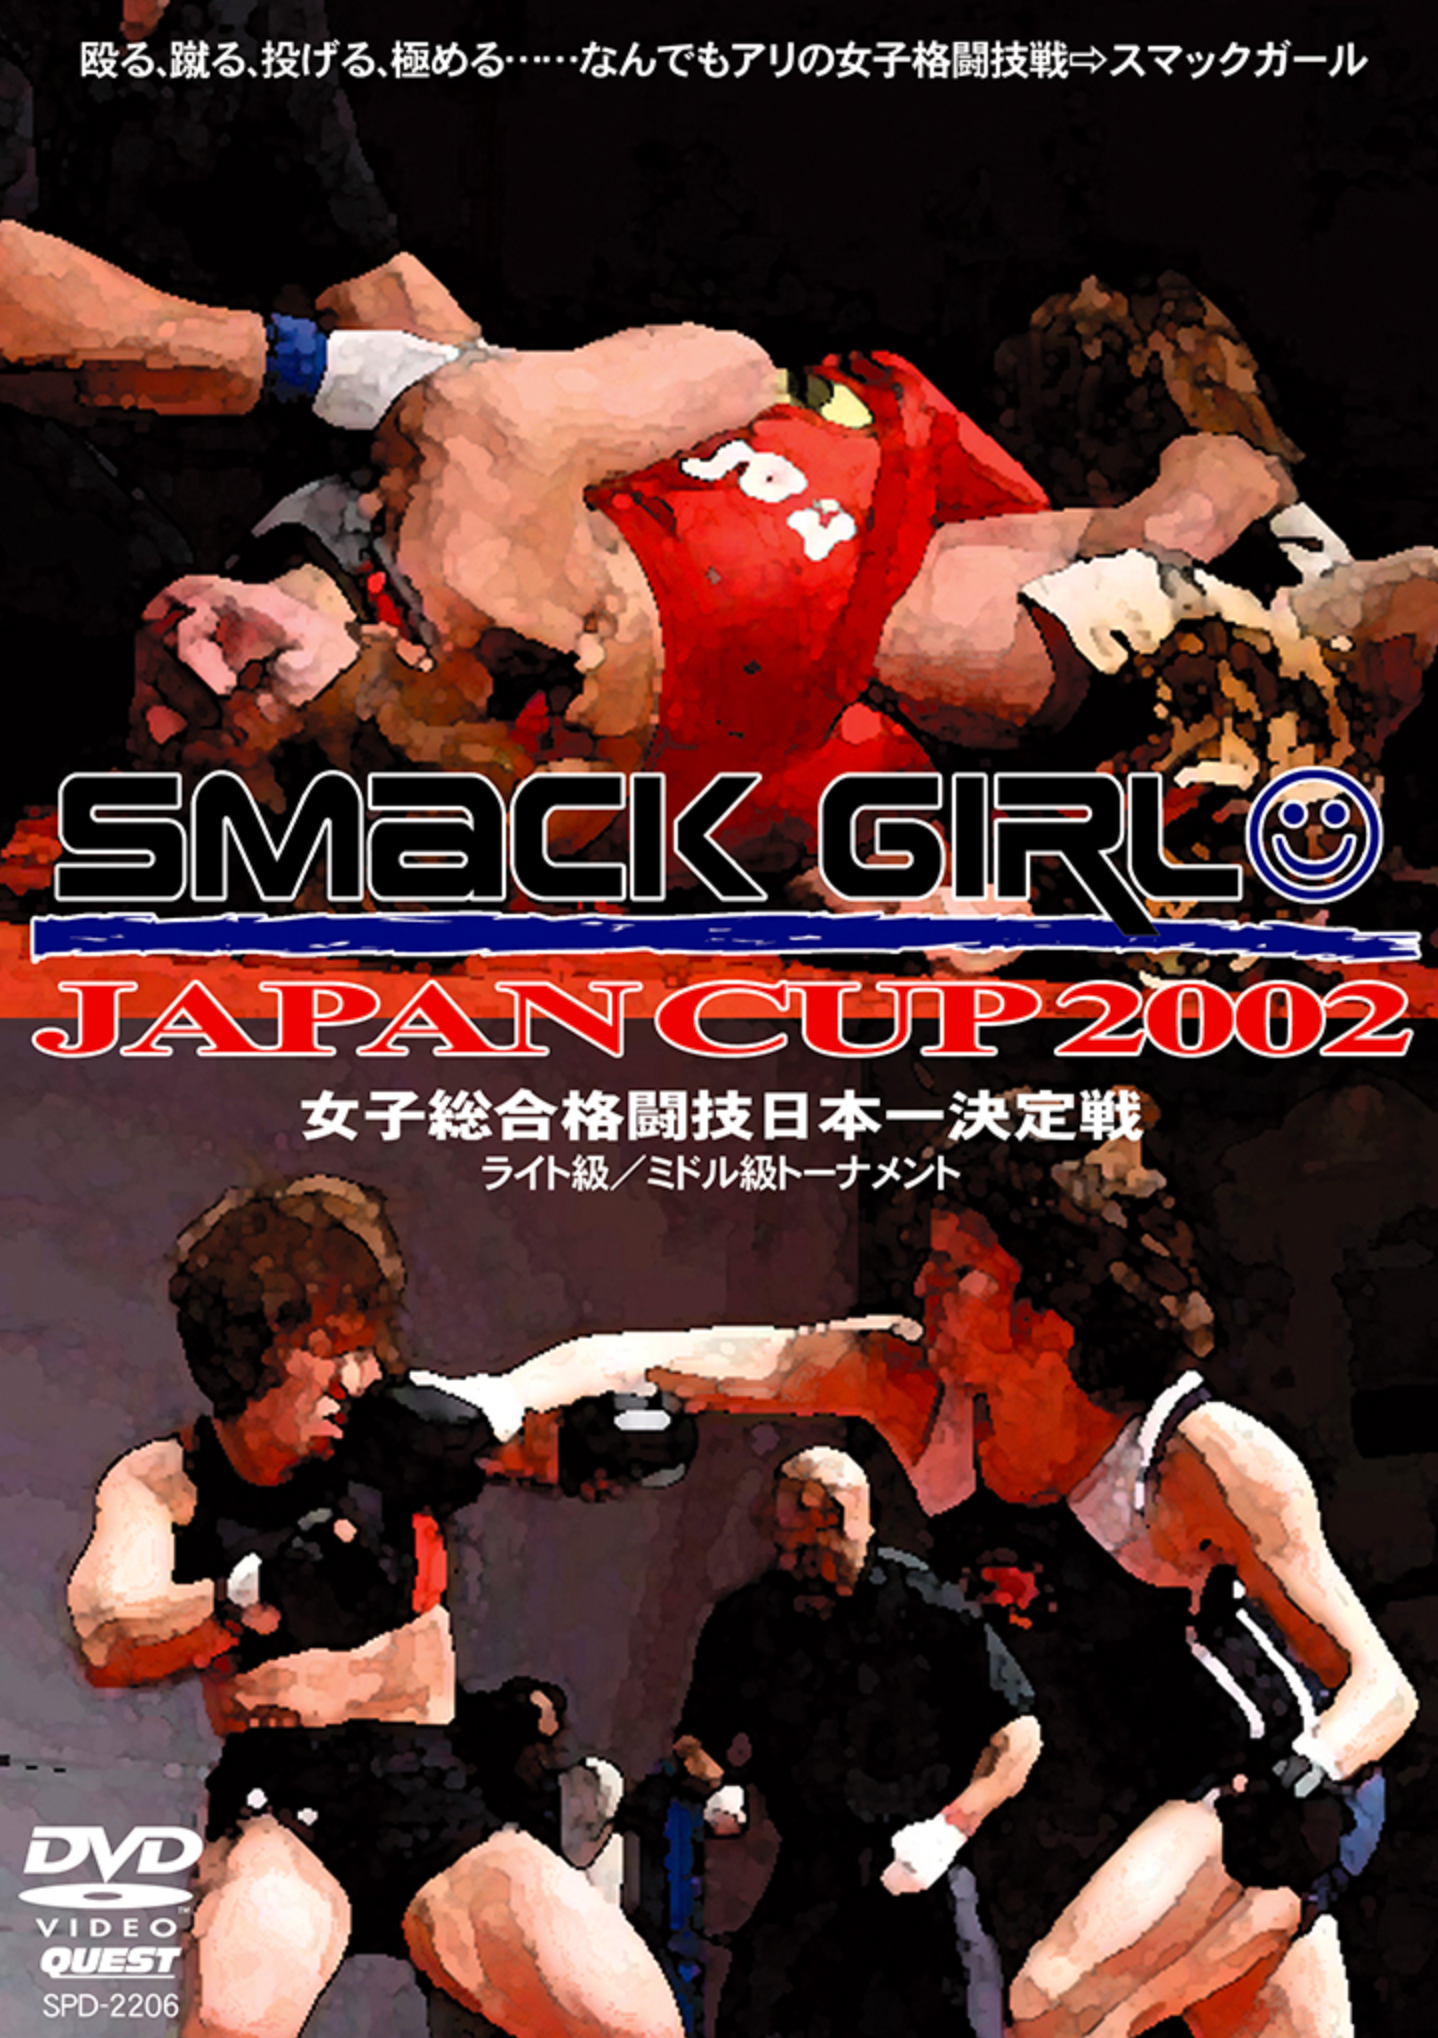 Smack Girl Japan Cup 2002 DVD